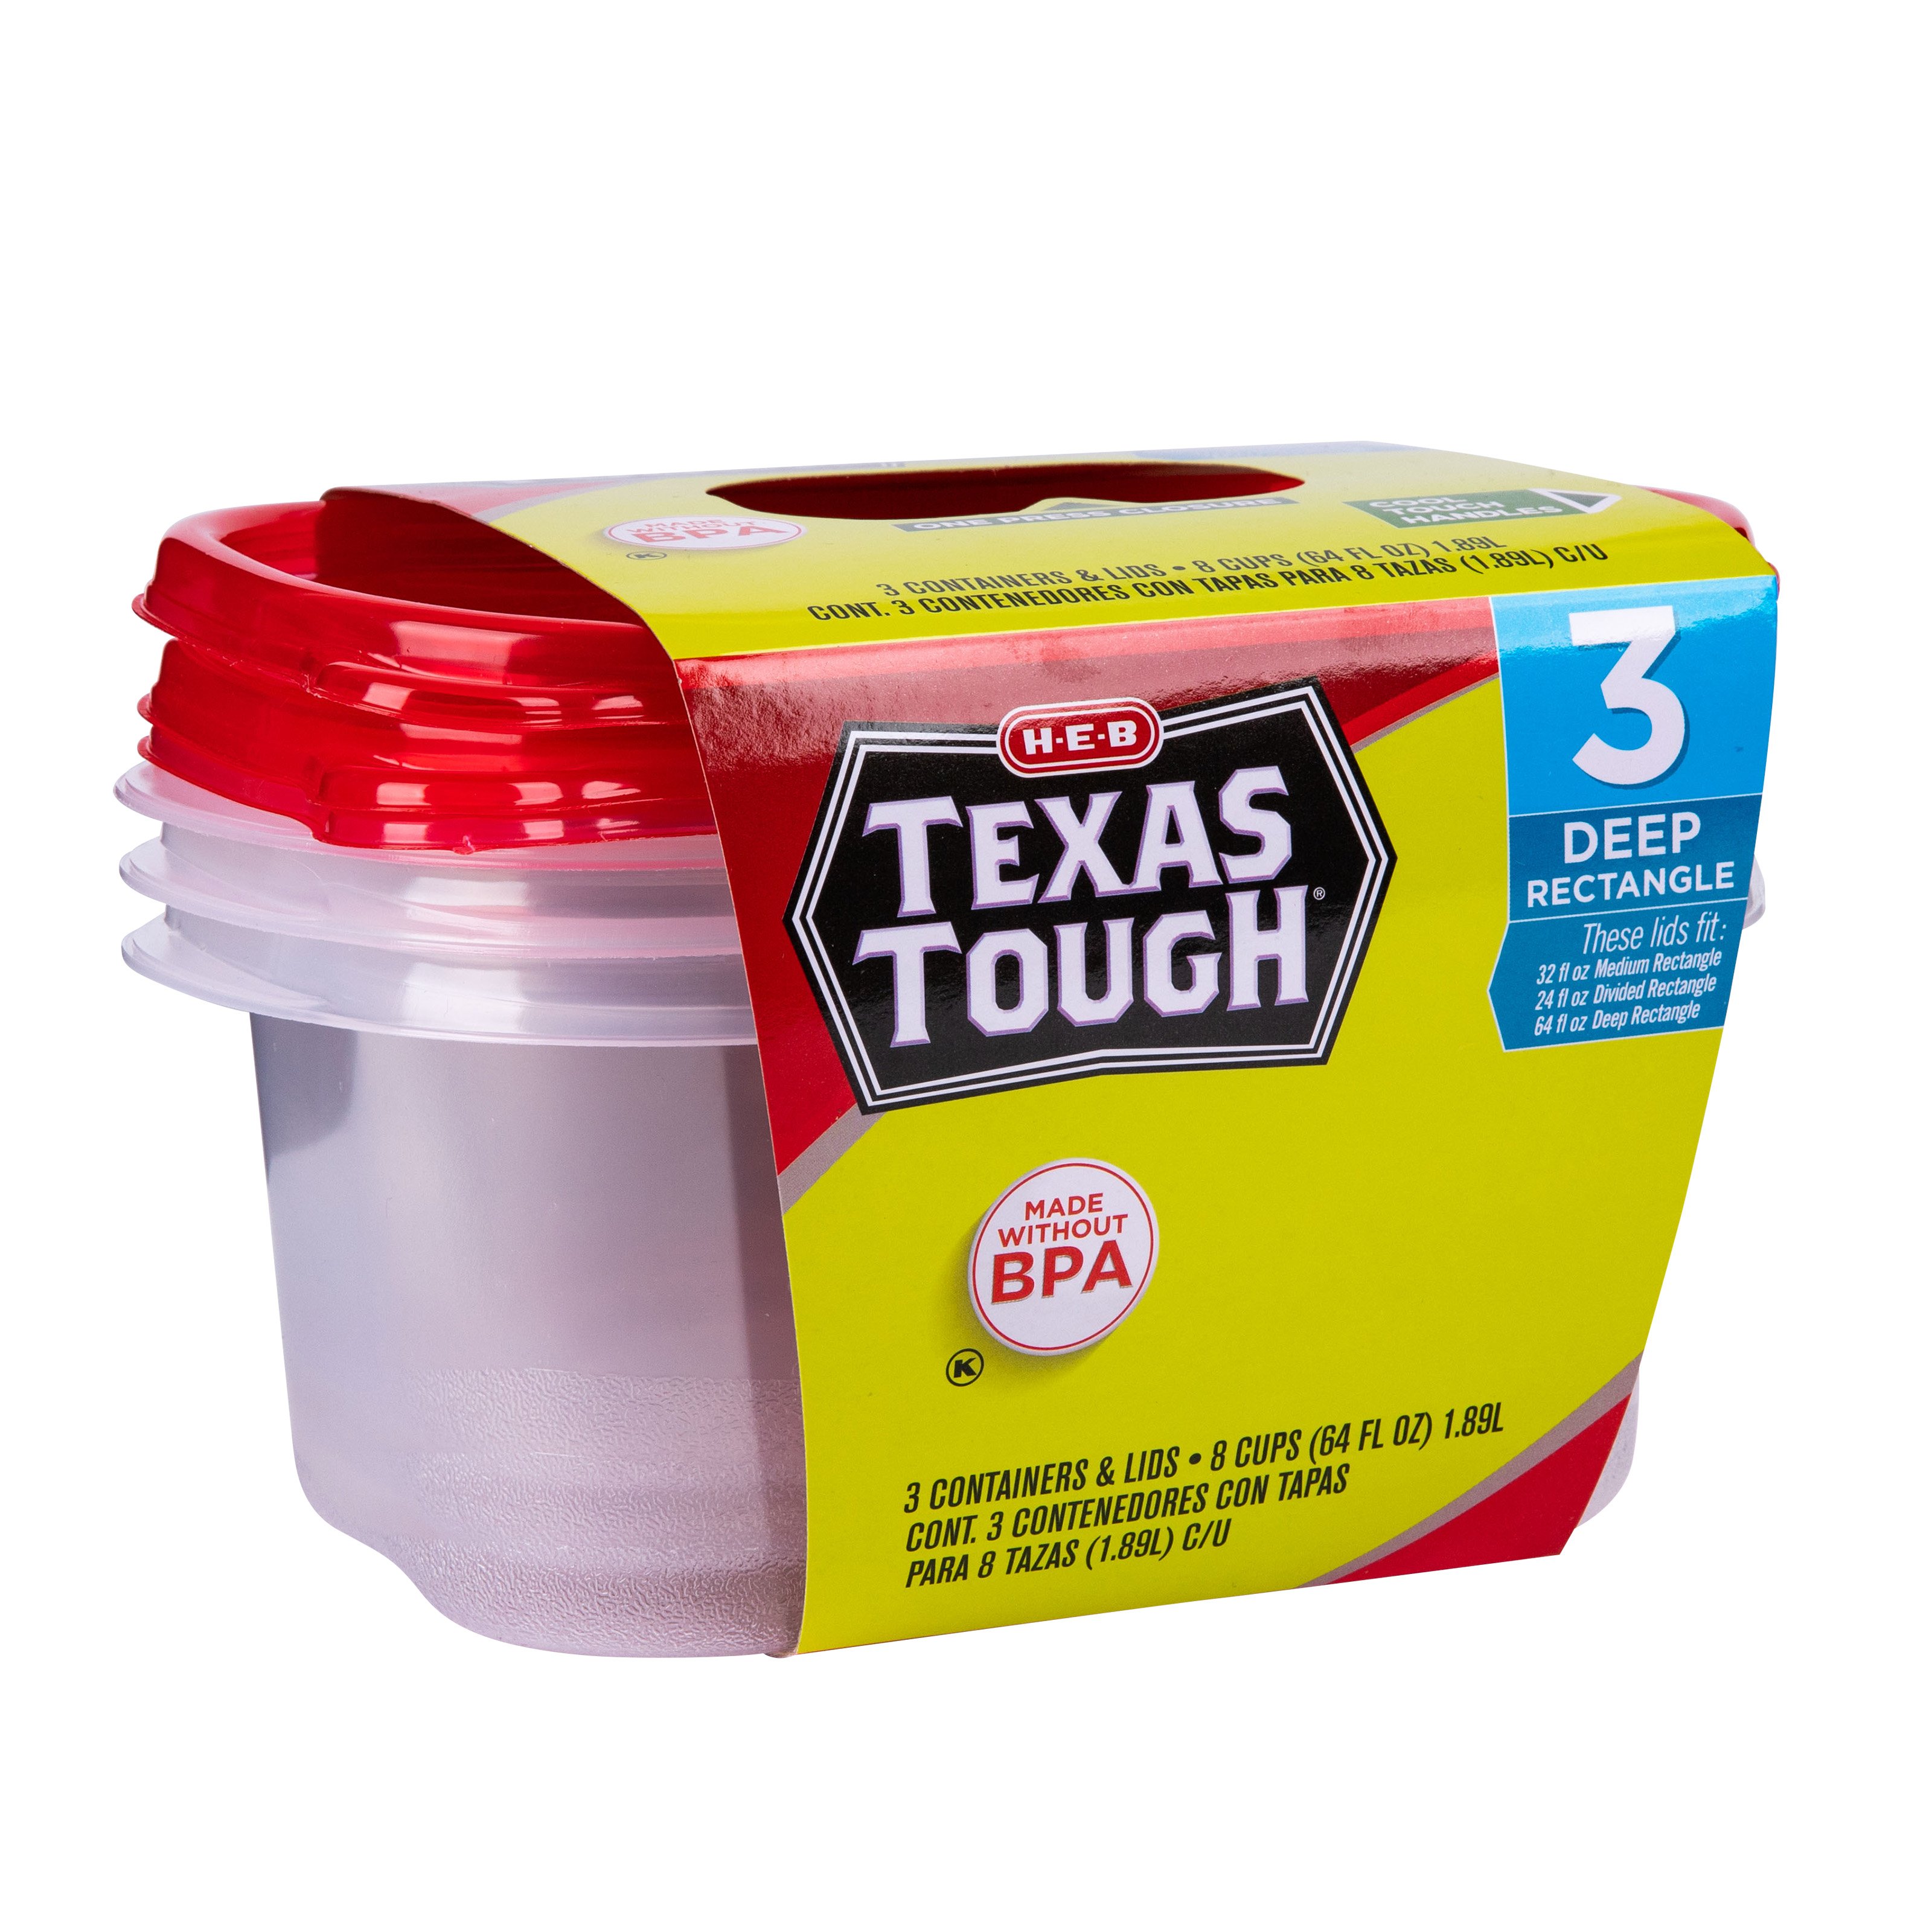 H-E-B Texas Tough Deep Rectangle Reusable Containers with Lids